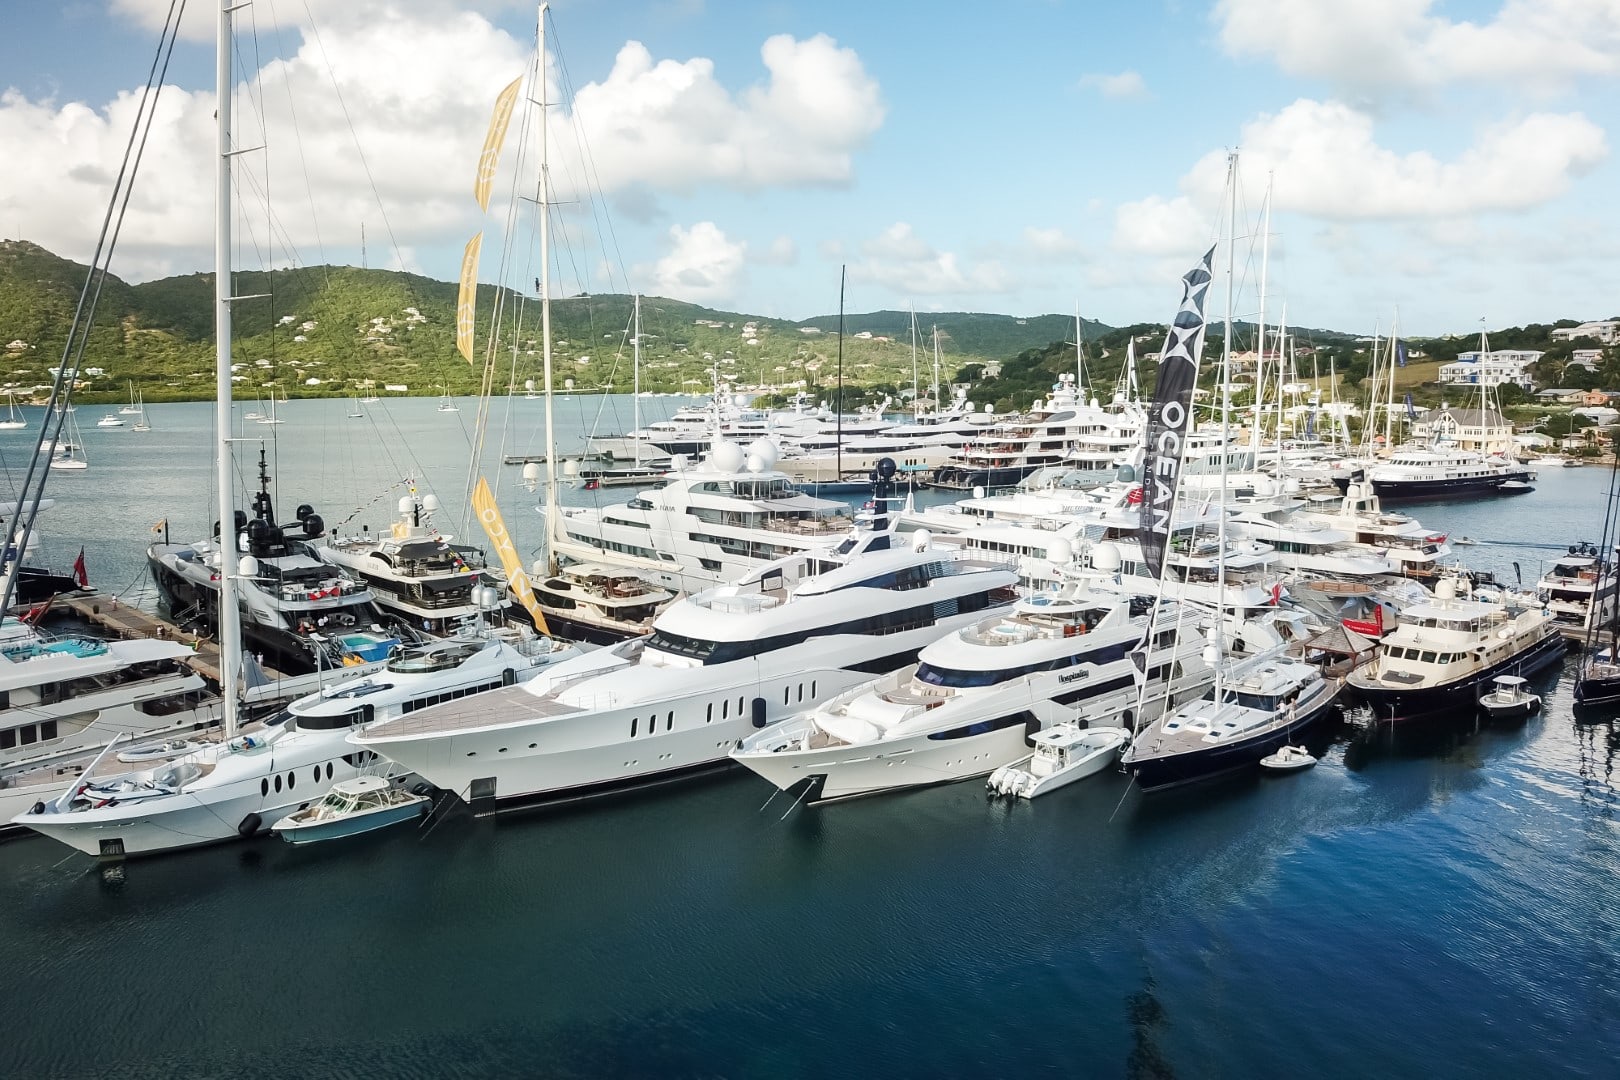 Antigua Charter Yacht Show FGI